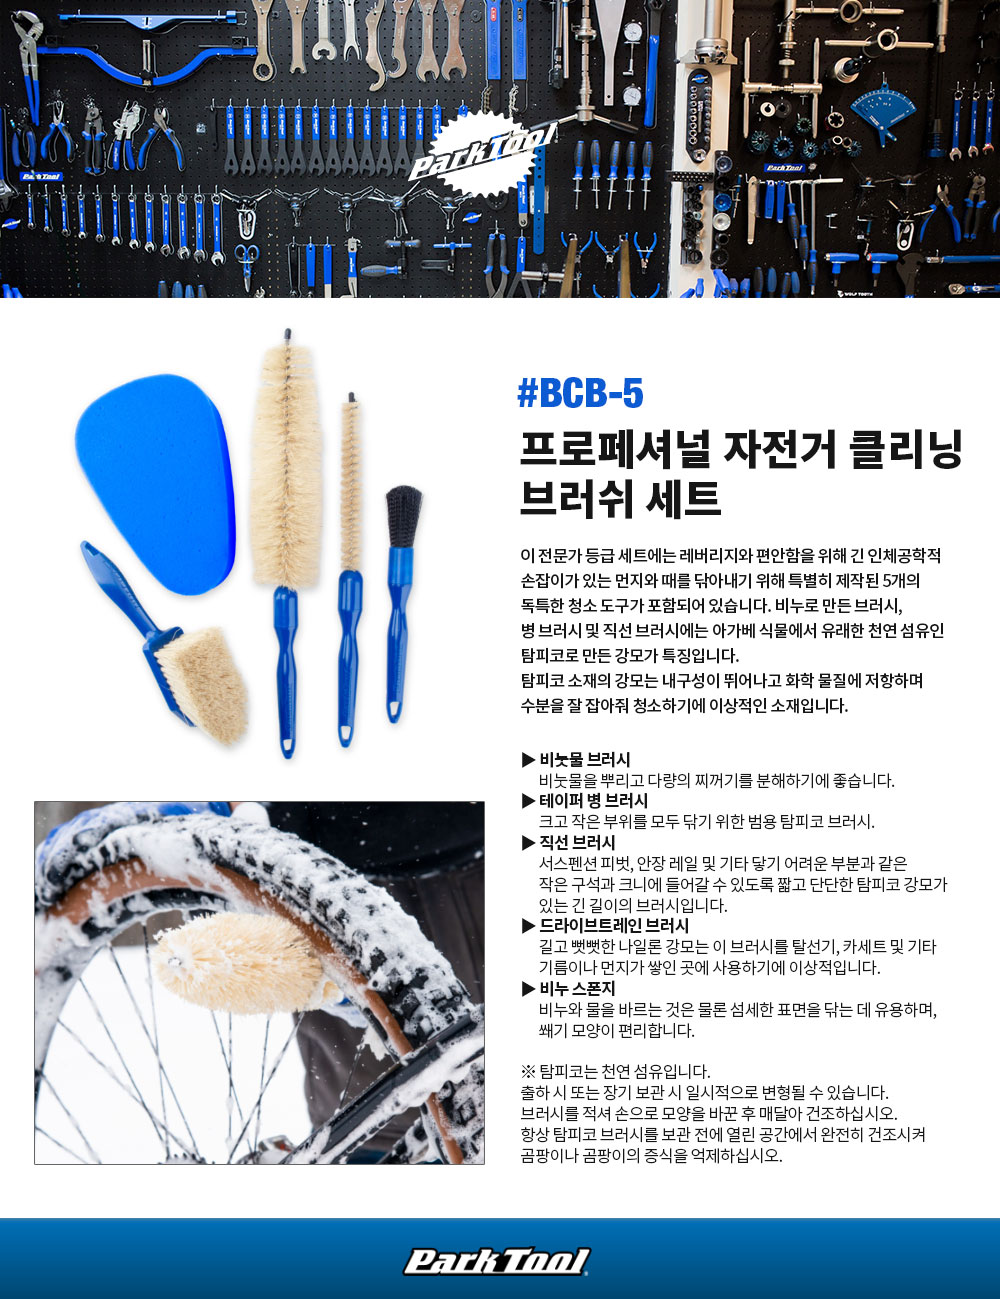 BCB-5 Professional Bike Cleaning Brush Set